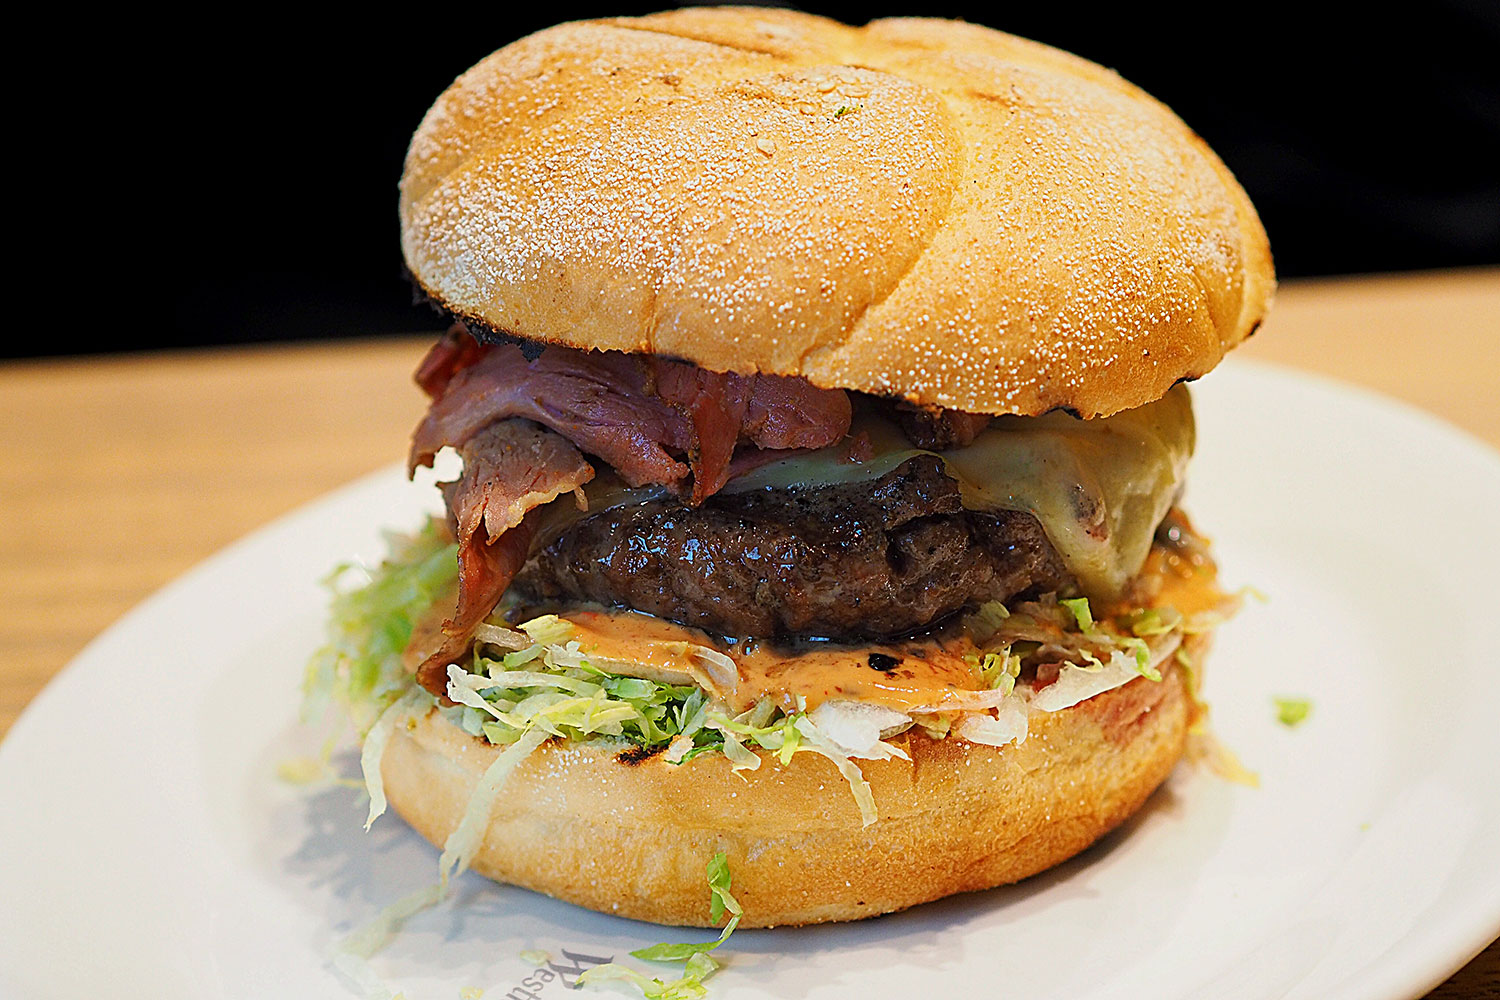 Reuben wagyu cheese burger ($14): Reuben and Moore, Sydney CBD. Sydney Food Blog Review